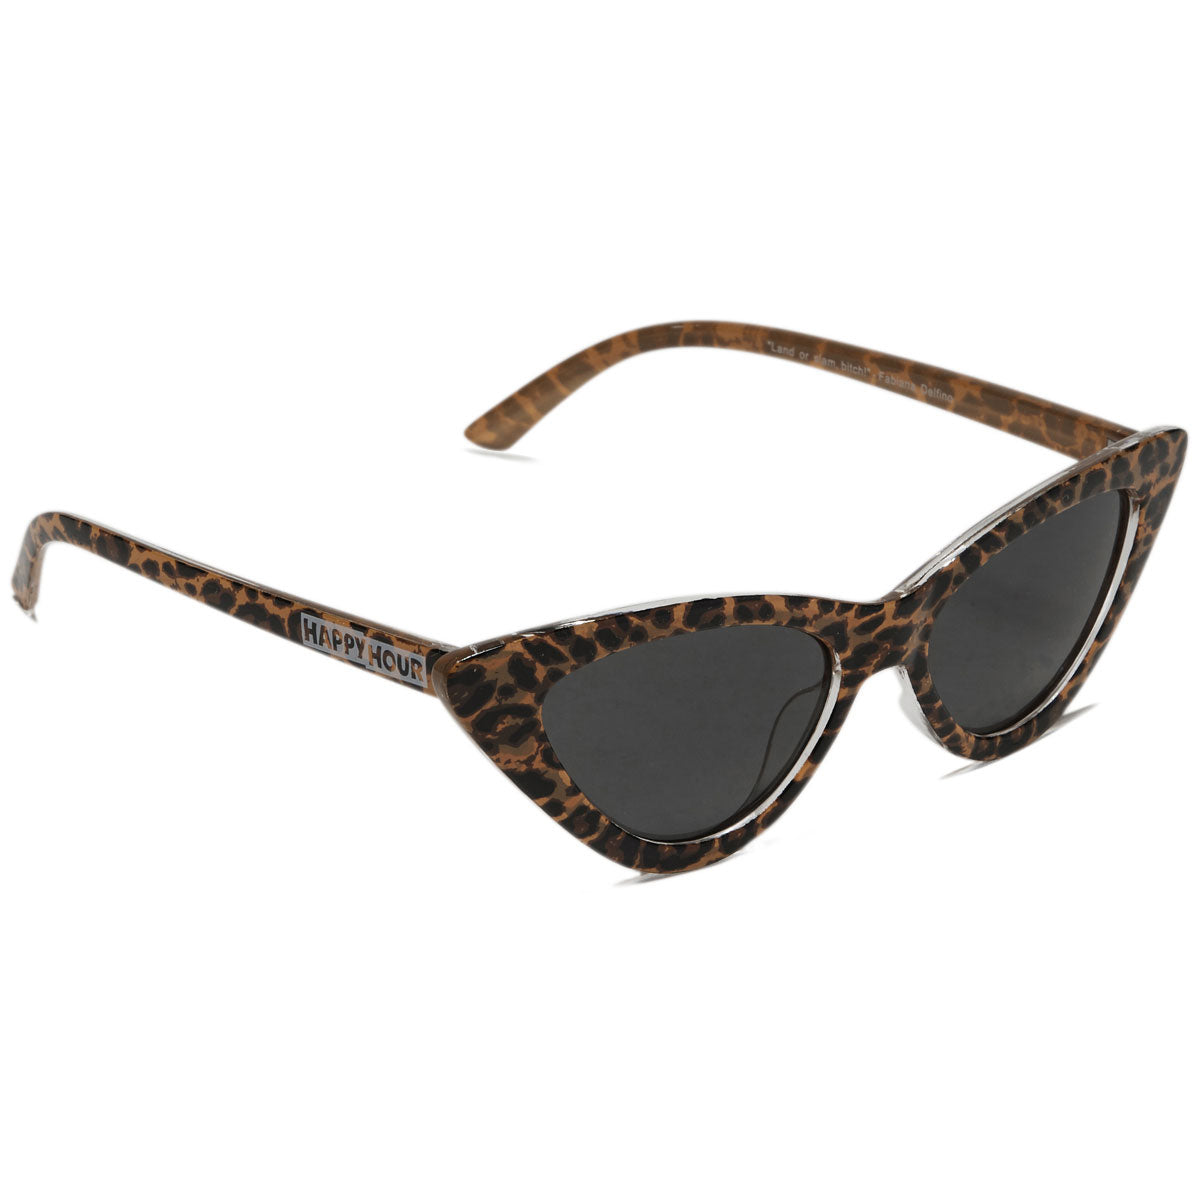 Happy Hour Space Needles Sunglasses - Leopard/Delfino image 1